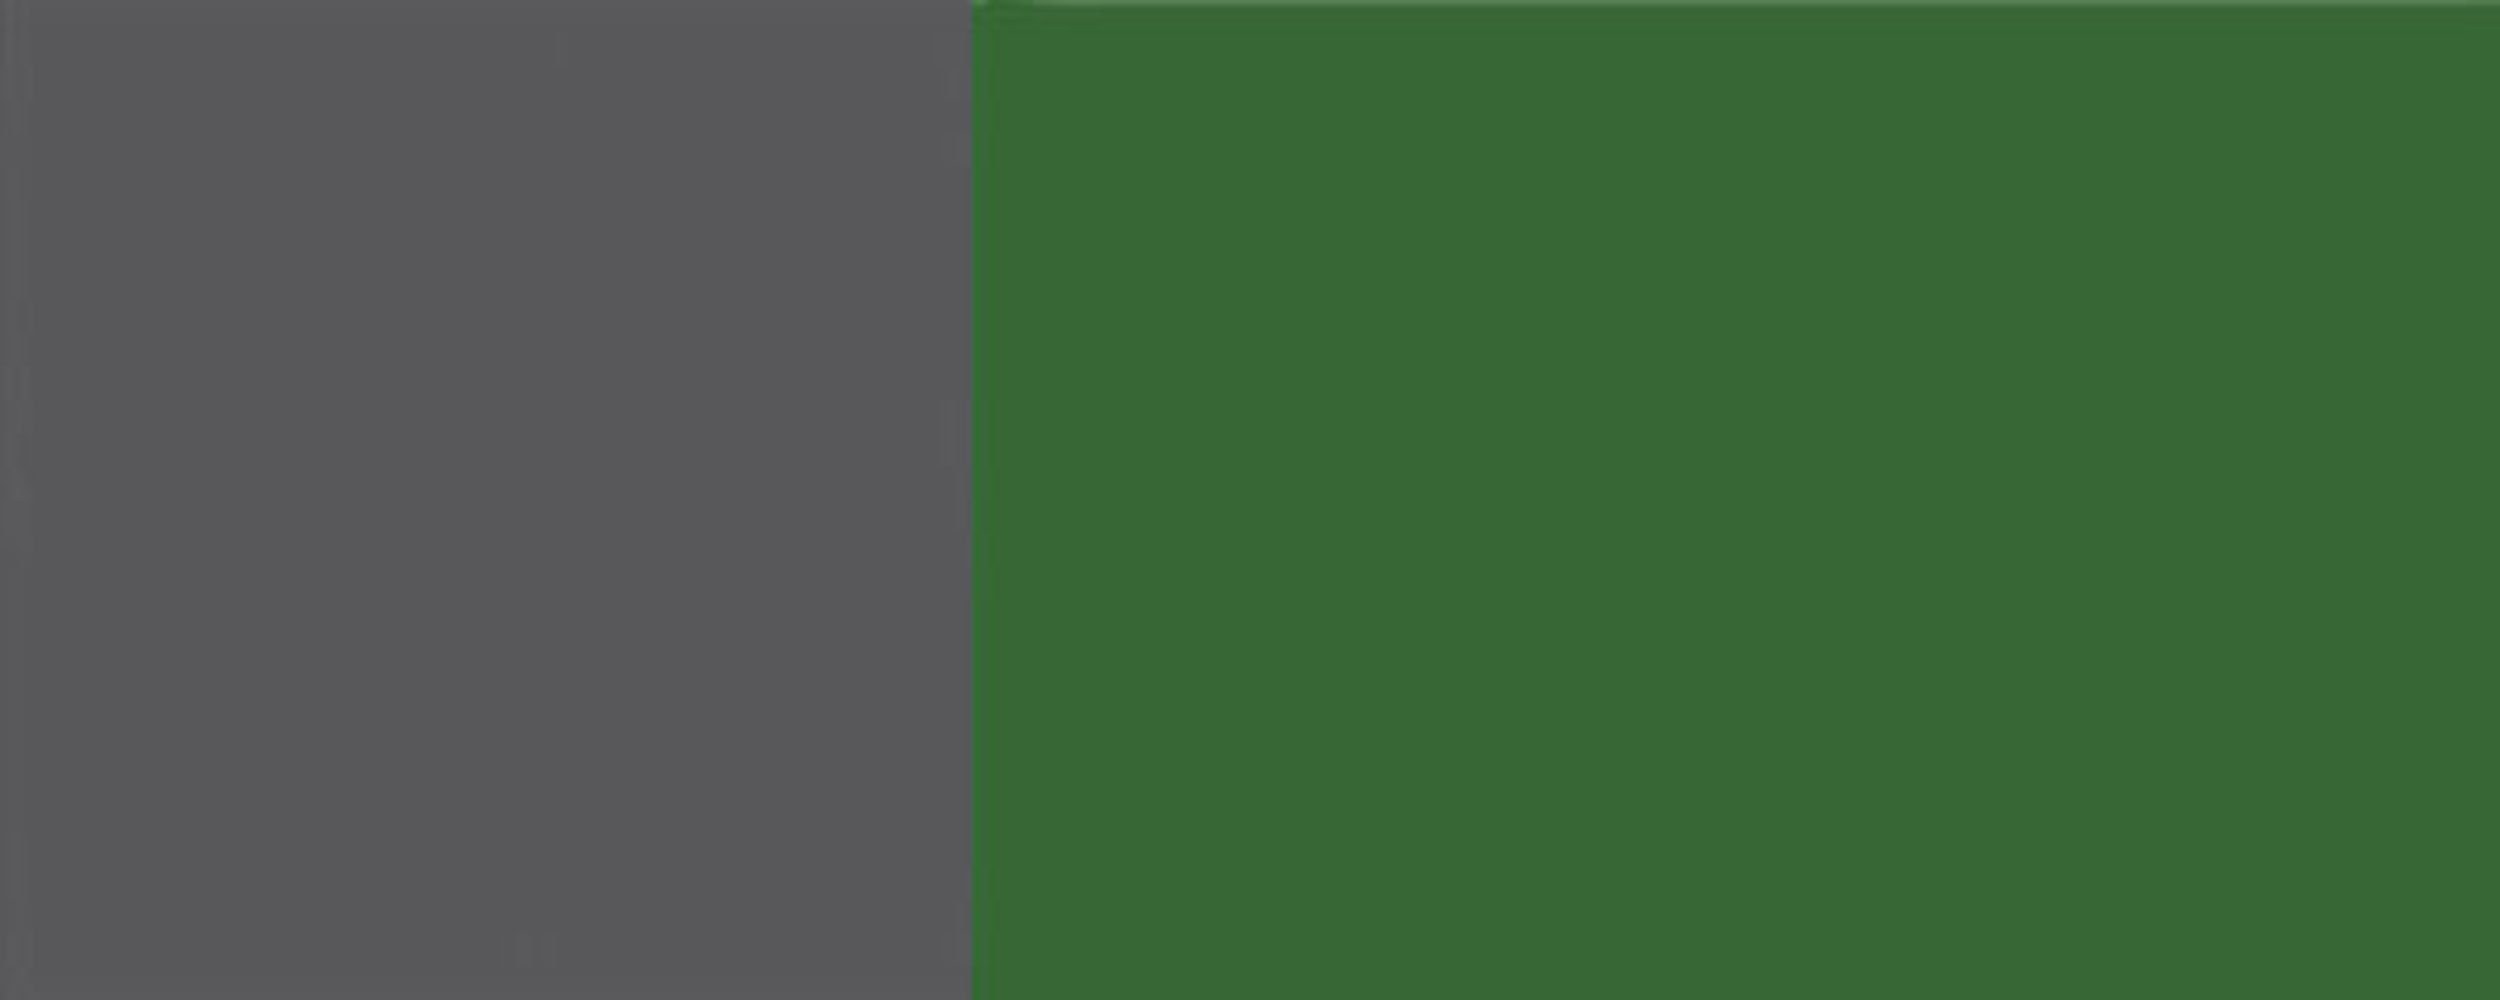 50cm RAL Hochglanz grifflos Florence Glashängeschrank Feldmann-Wohnen 1-türig (Florence) wählbar und Ausführung Korpusfarbe Front-, 6001 smaragdgrün